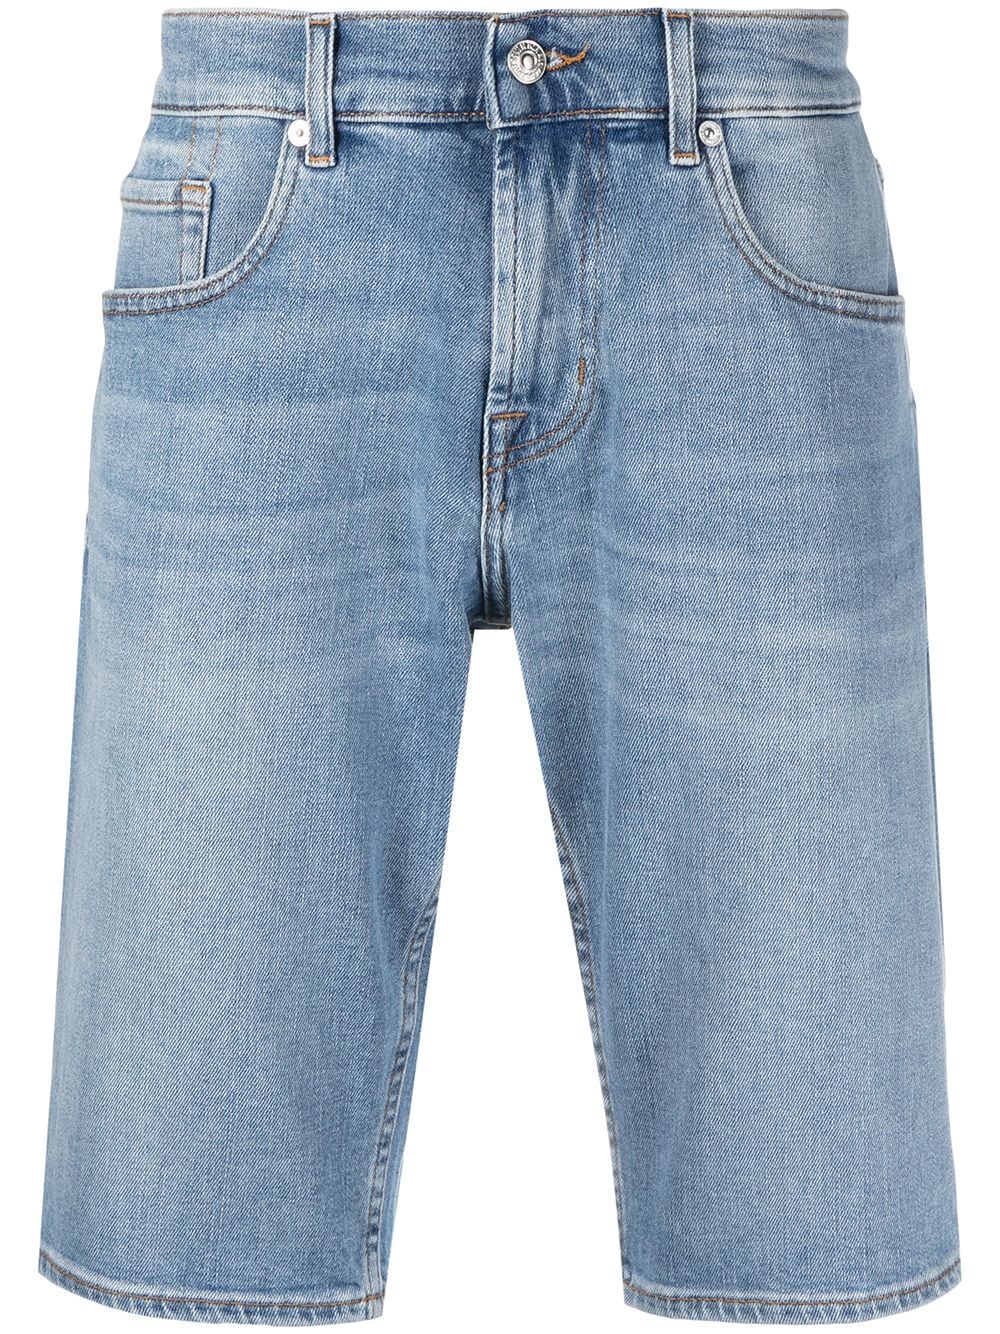 фото 7 for all mankind джинсовые шорты